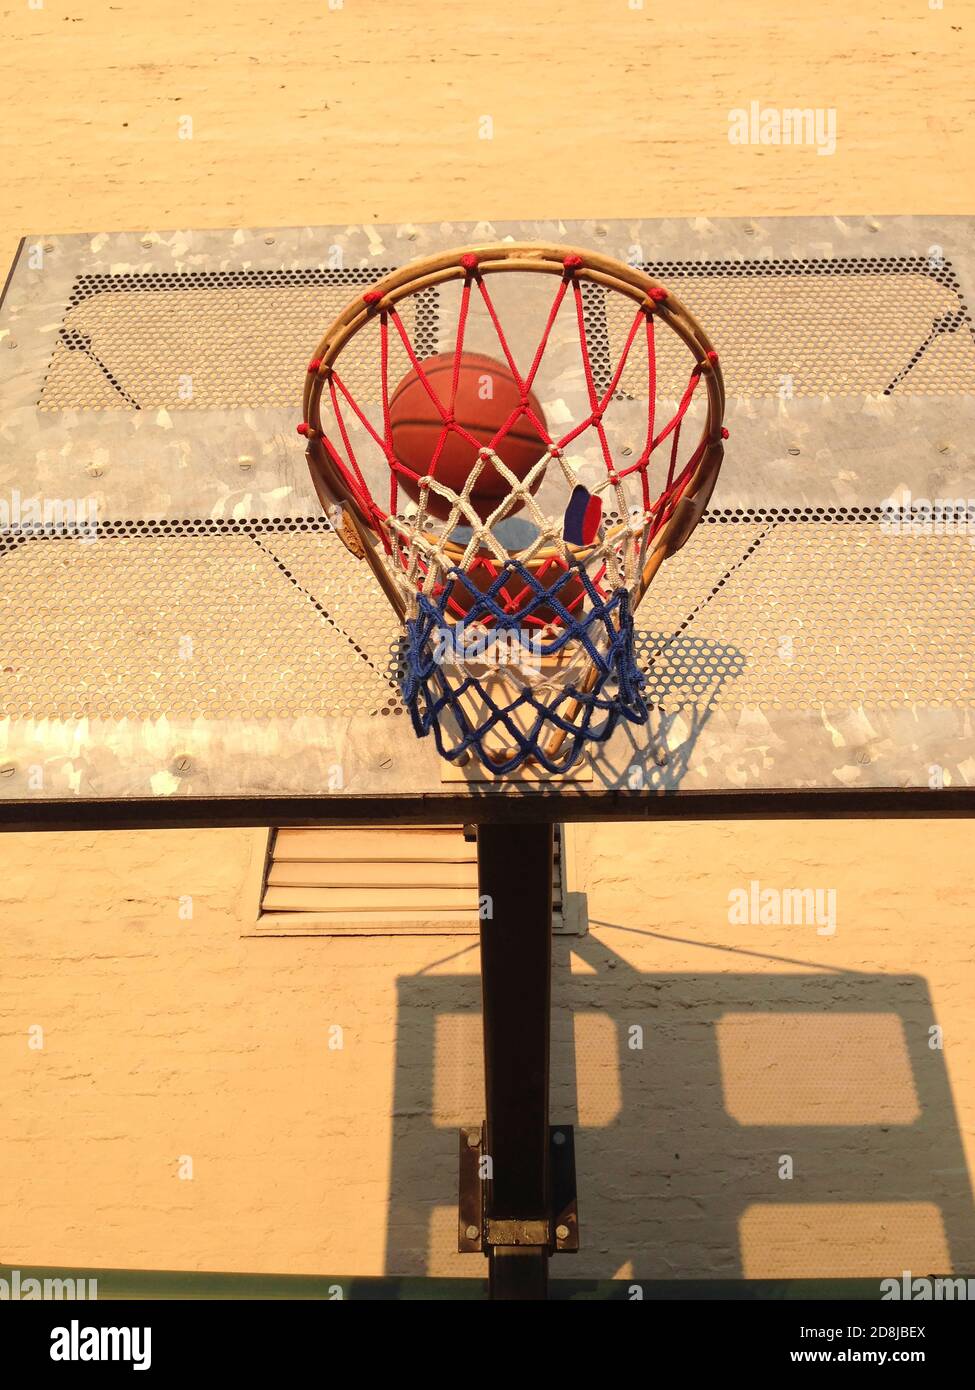 Low Angle View of Basketball Hoop and Ball Stock Photo